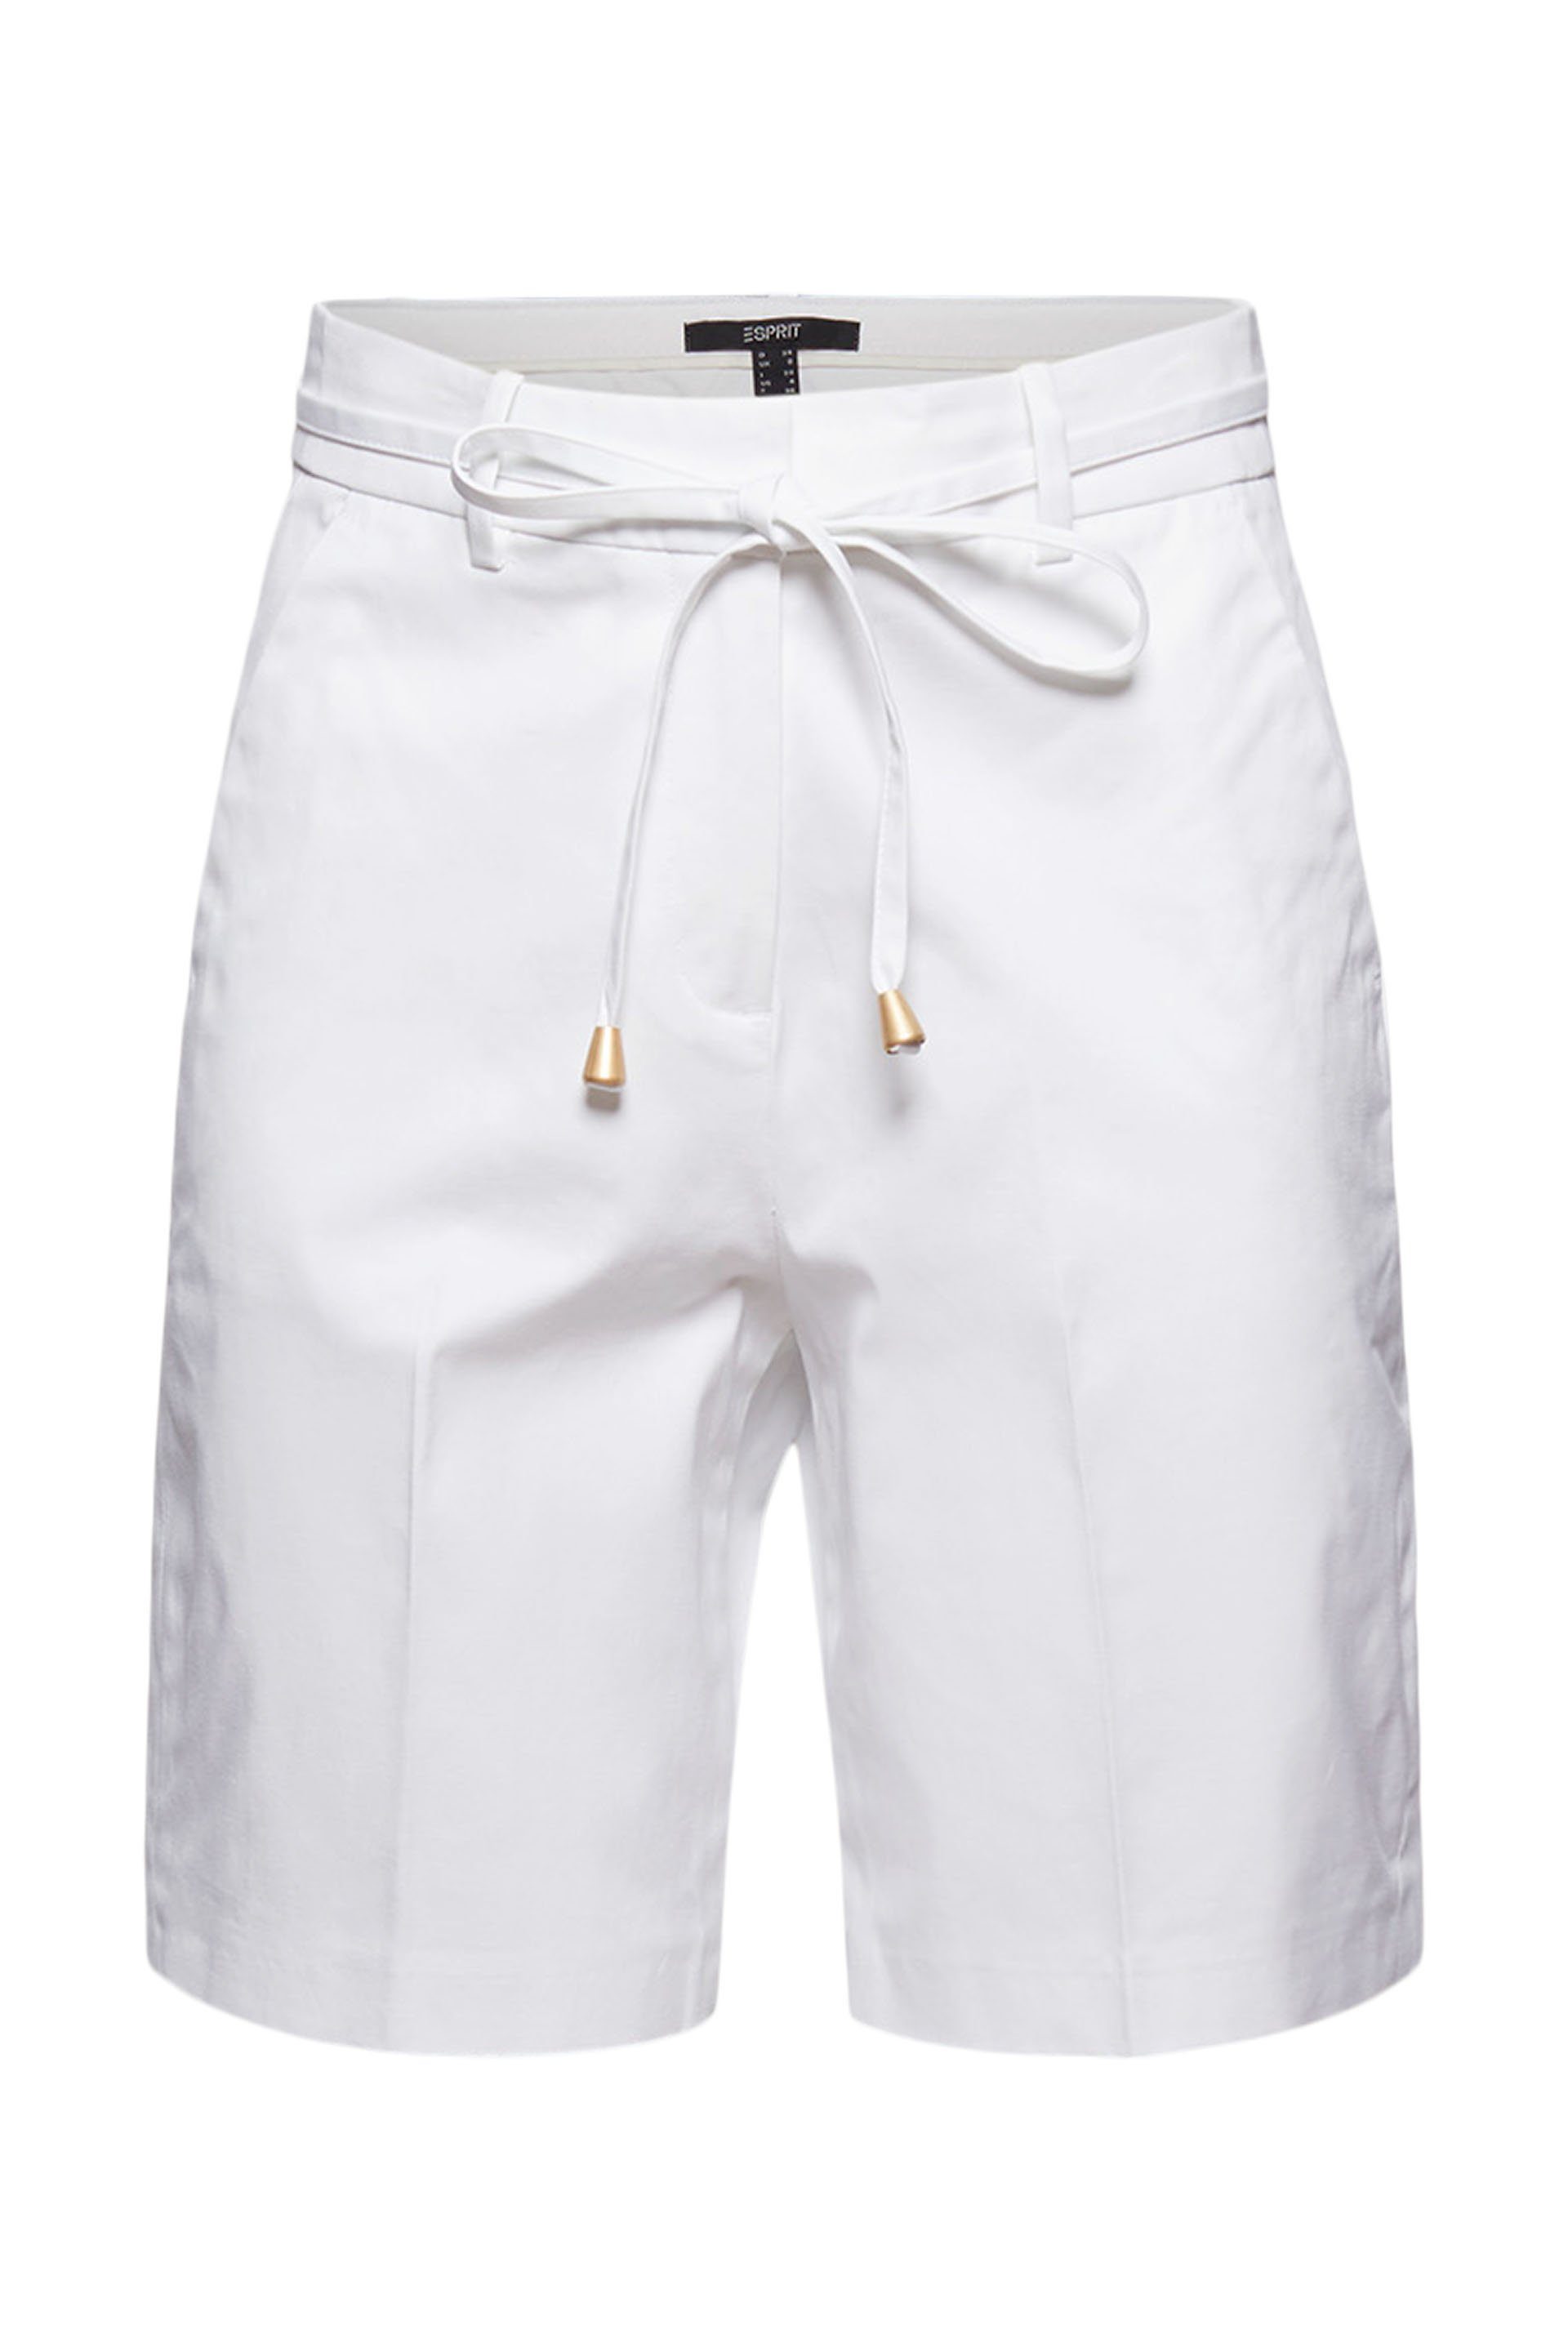 Esprit white Collection Shorts